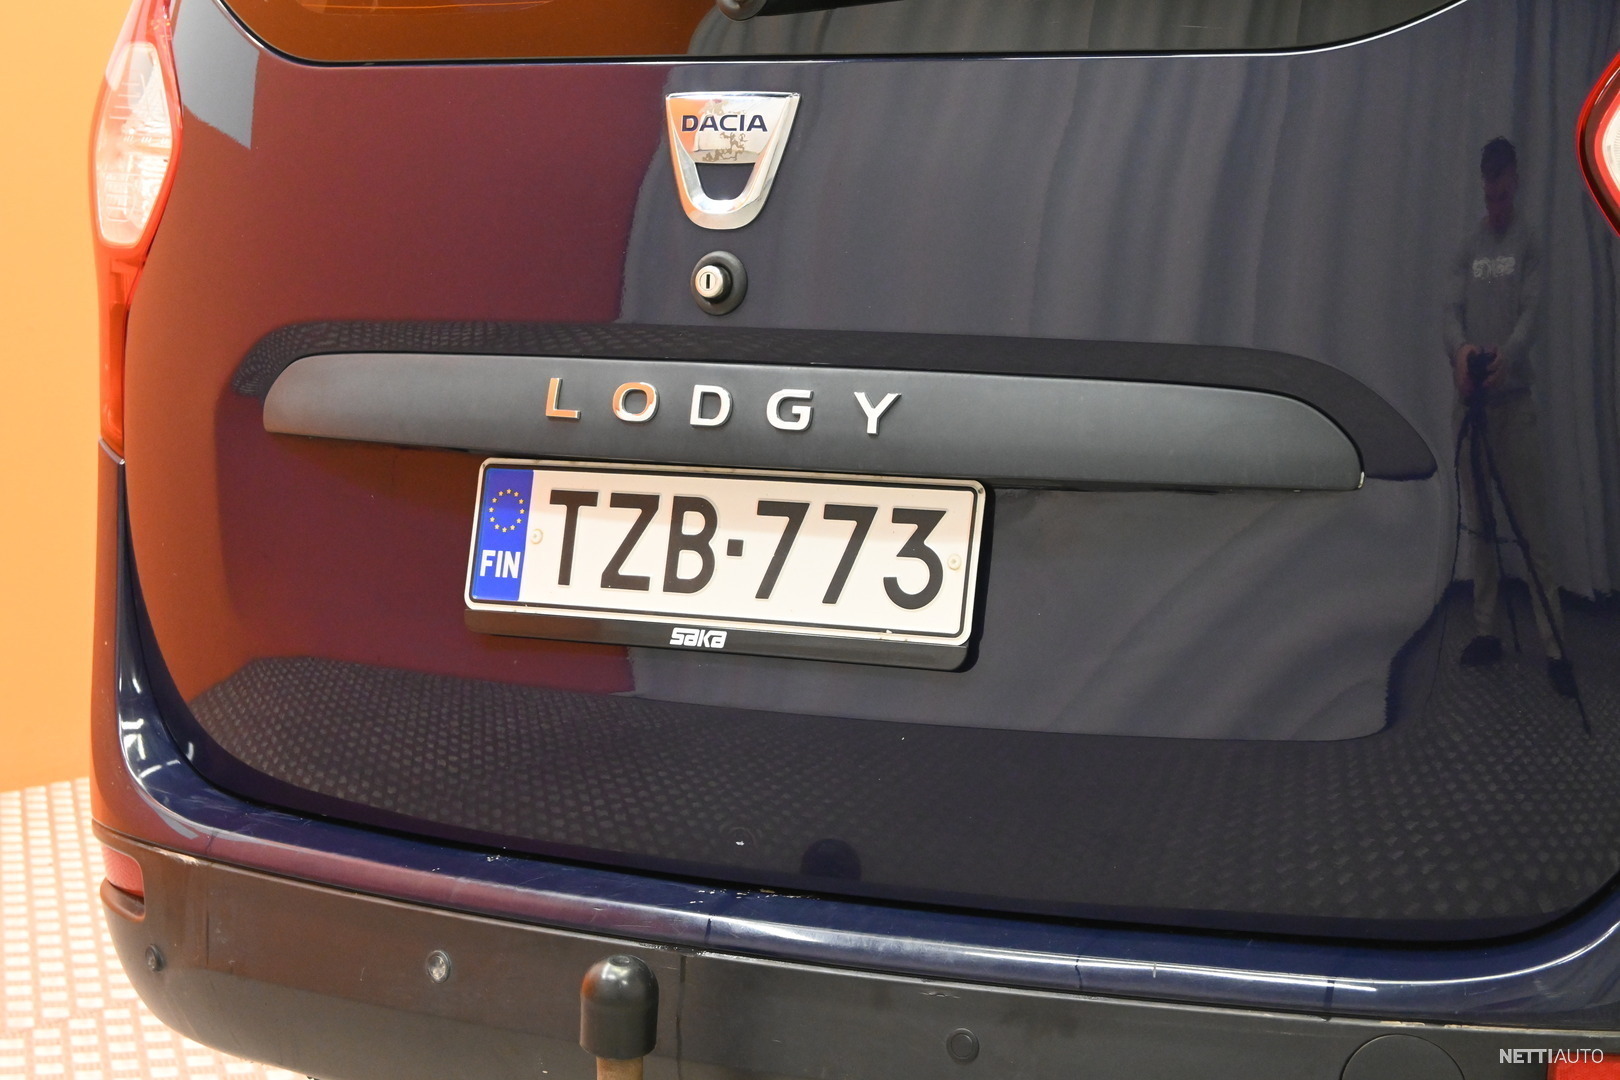 Lodgy - Einparkhilfe hinten (Dacia Original)